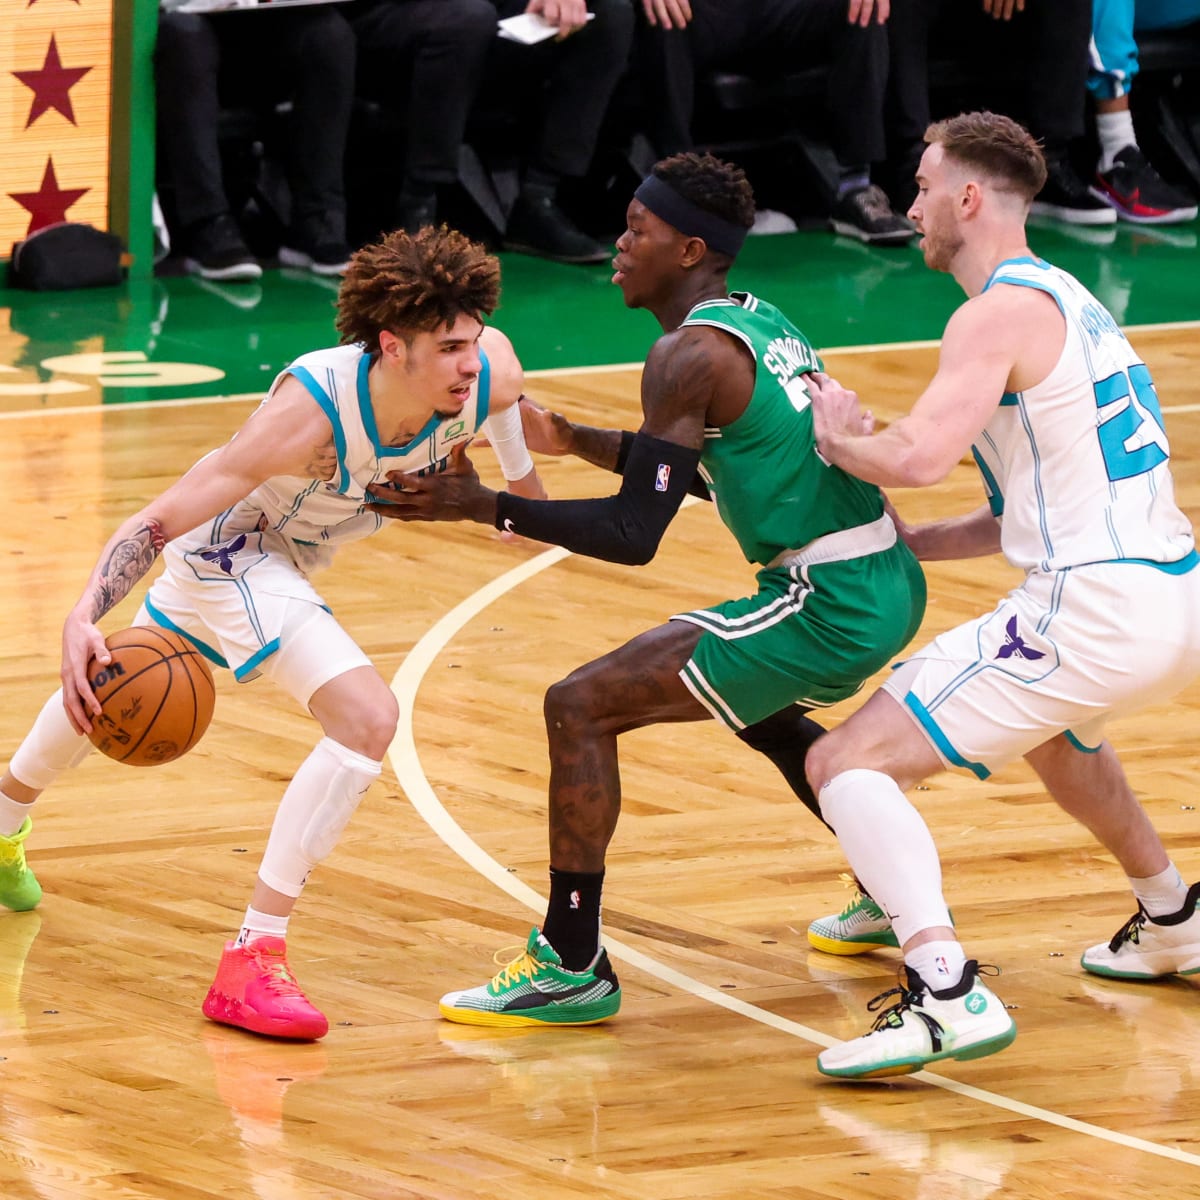 Gordon Hayward Shows No Rust In Return To Celtics Lineup - CBS Boston